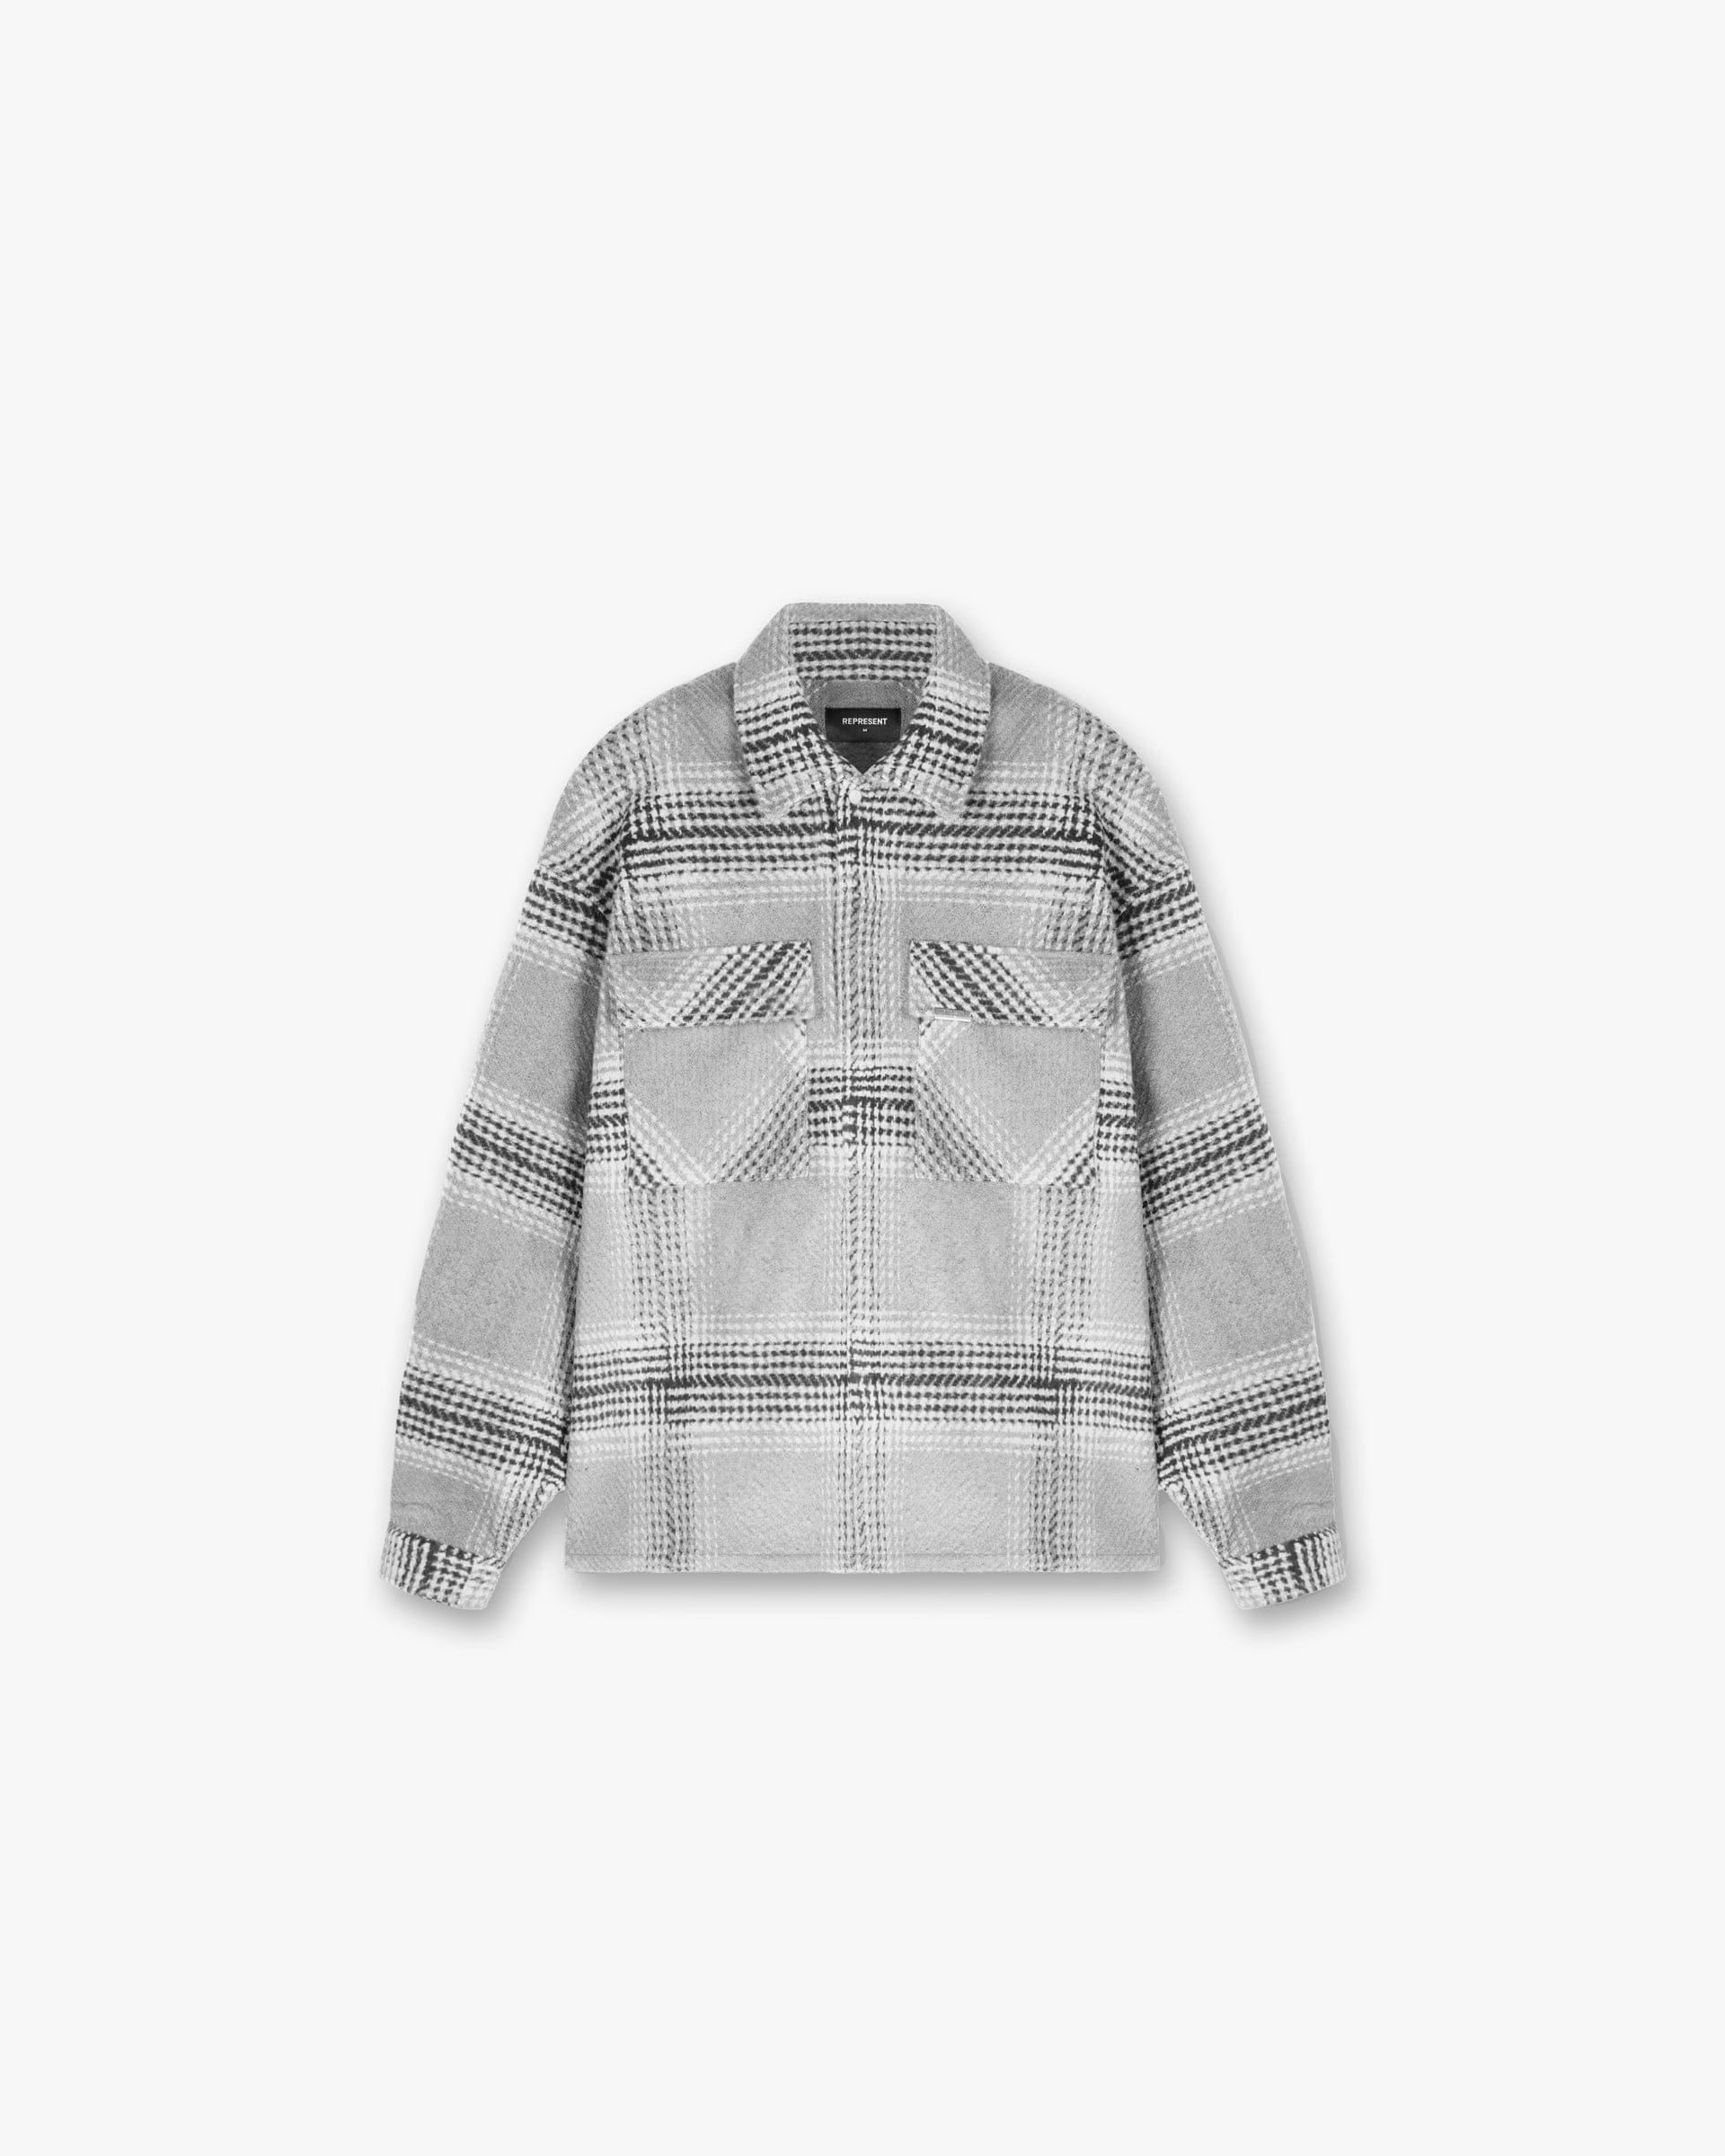 Represent Flannel Shirt - Grey Check